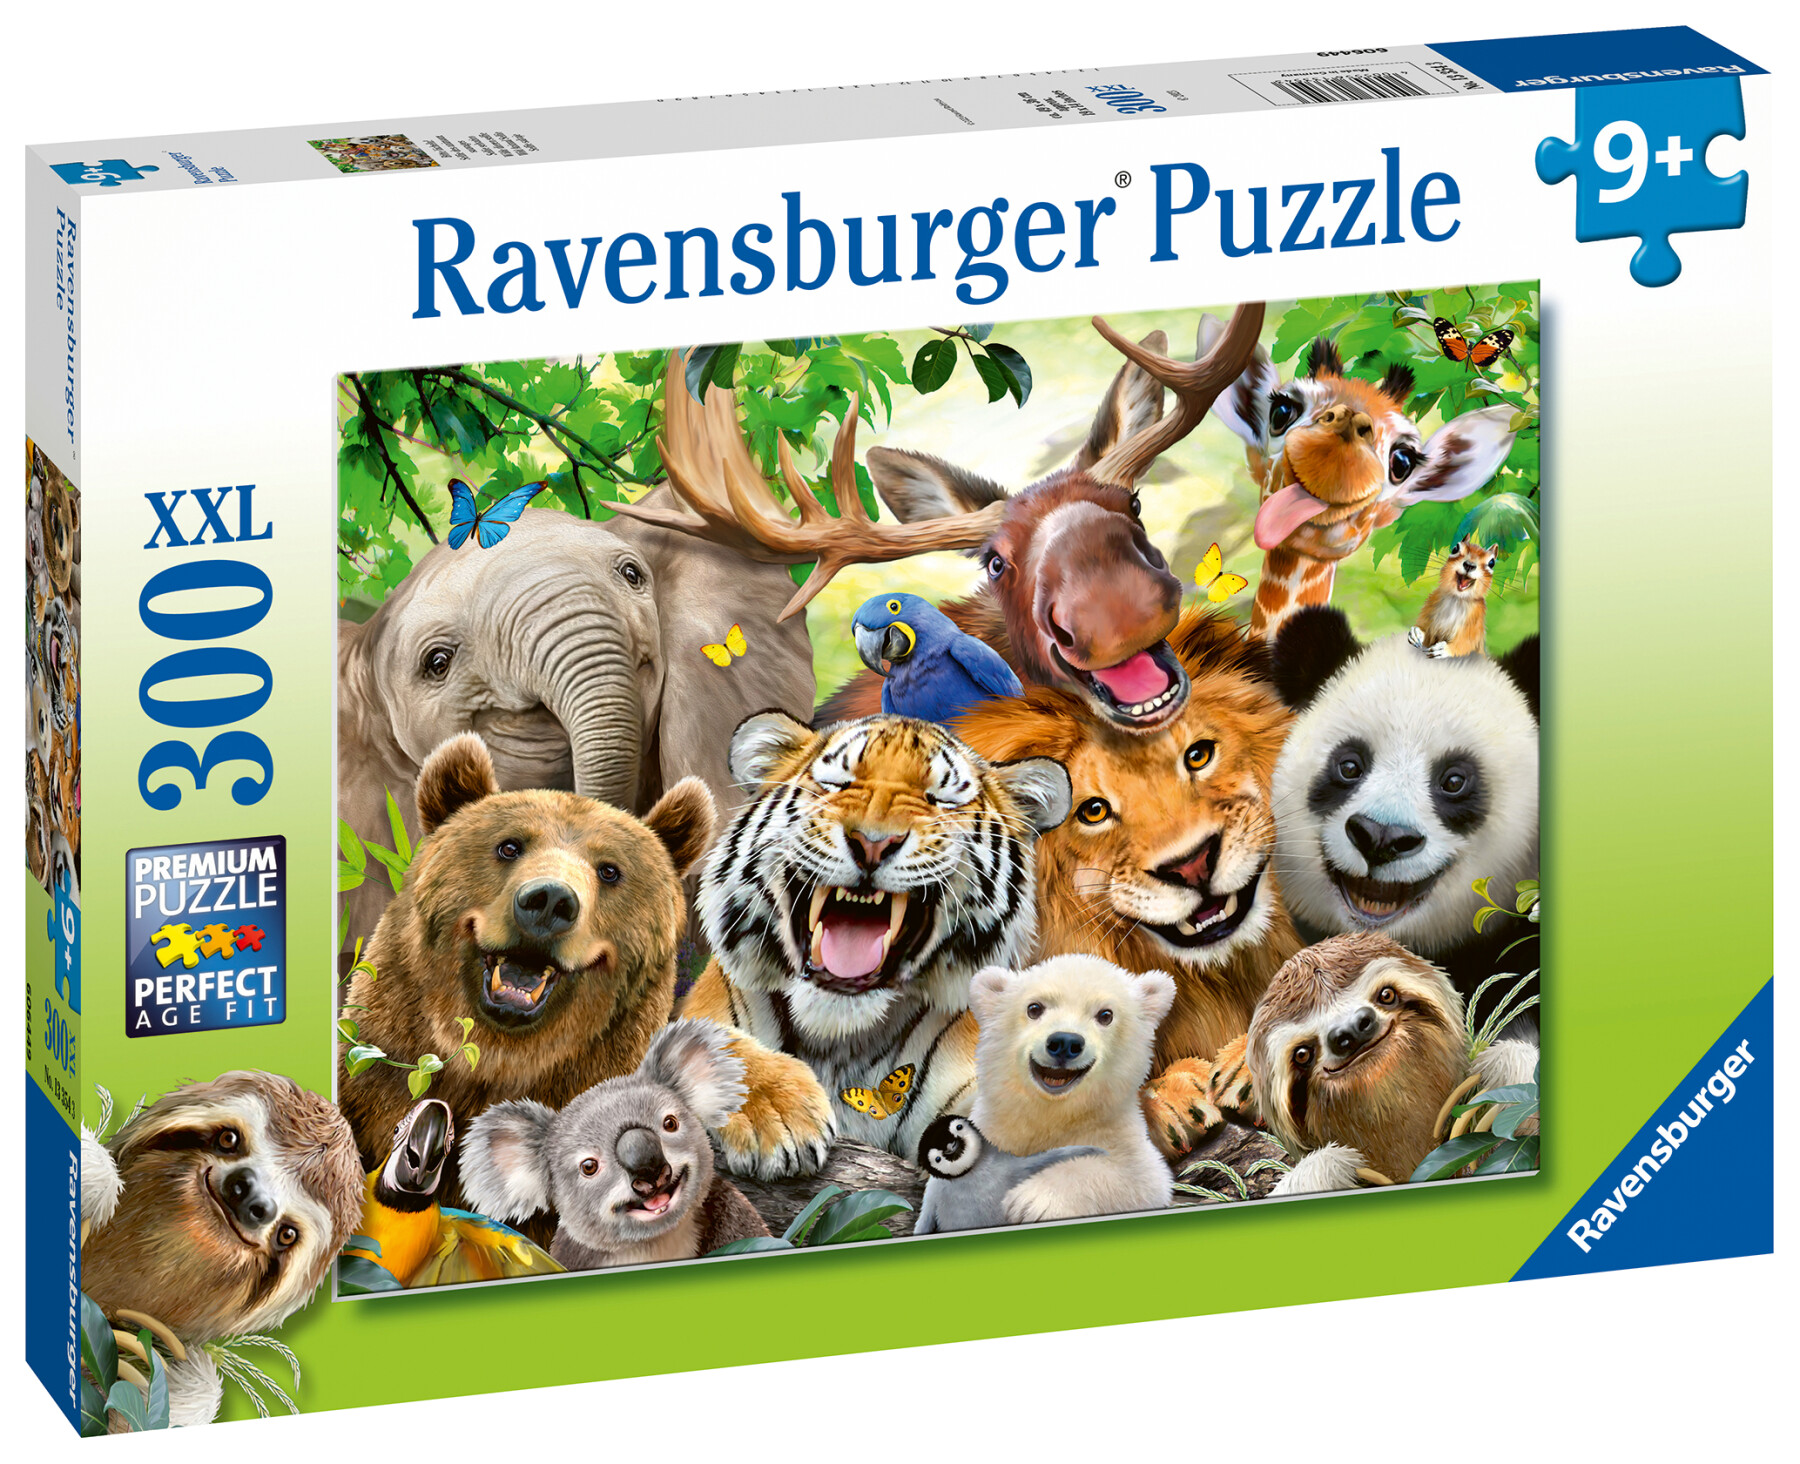 Ravensburger - puzzle selfie selvatico, 300 pezzi xxl, età raccomandata 9+ anni - RAVENSBURGER